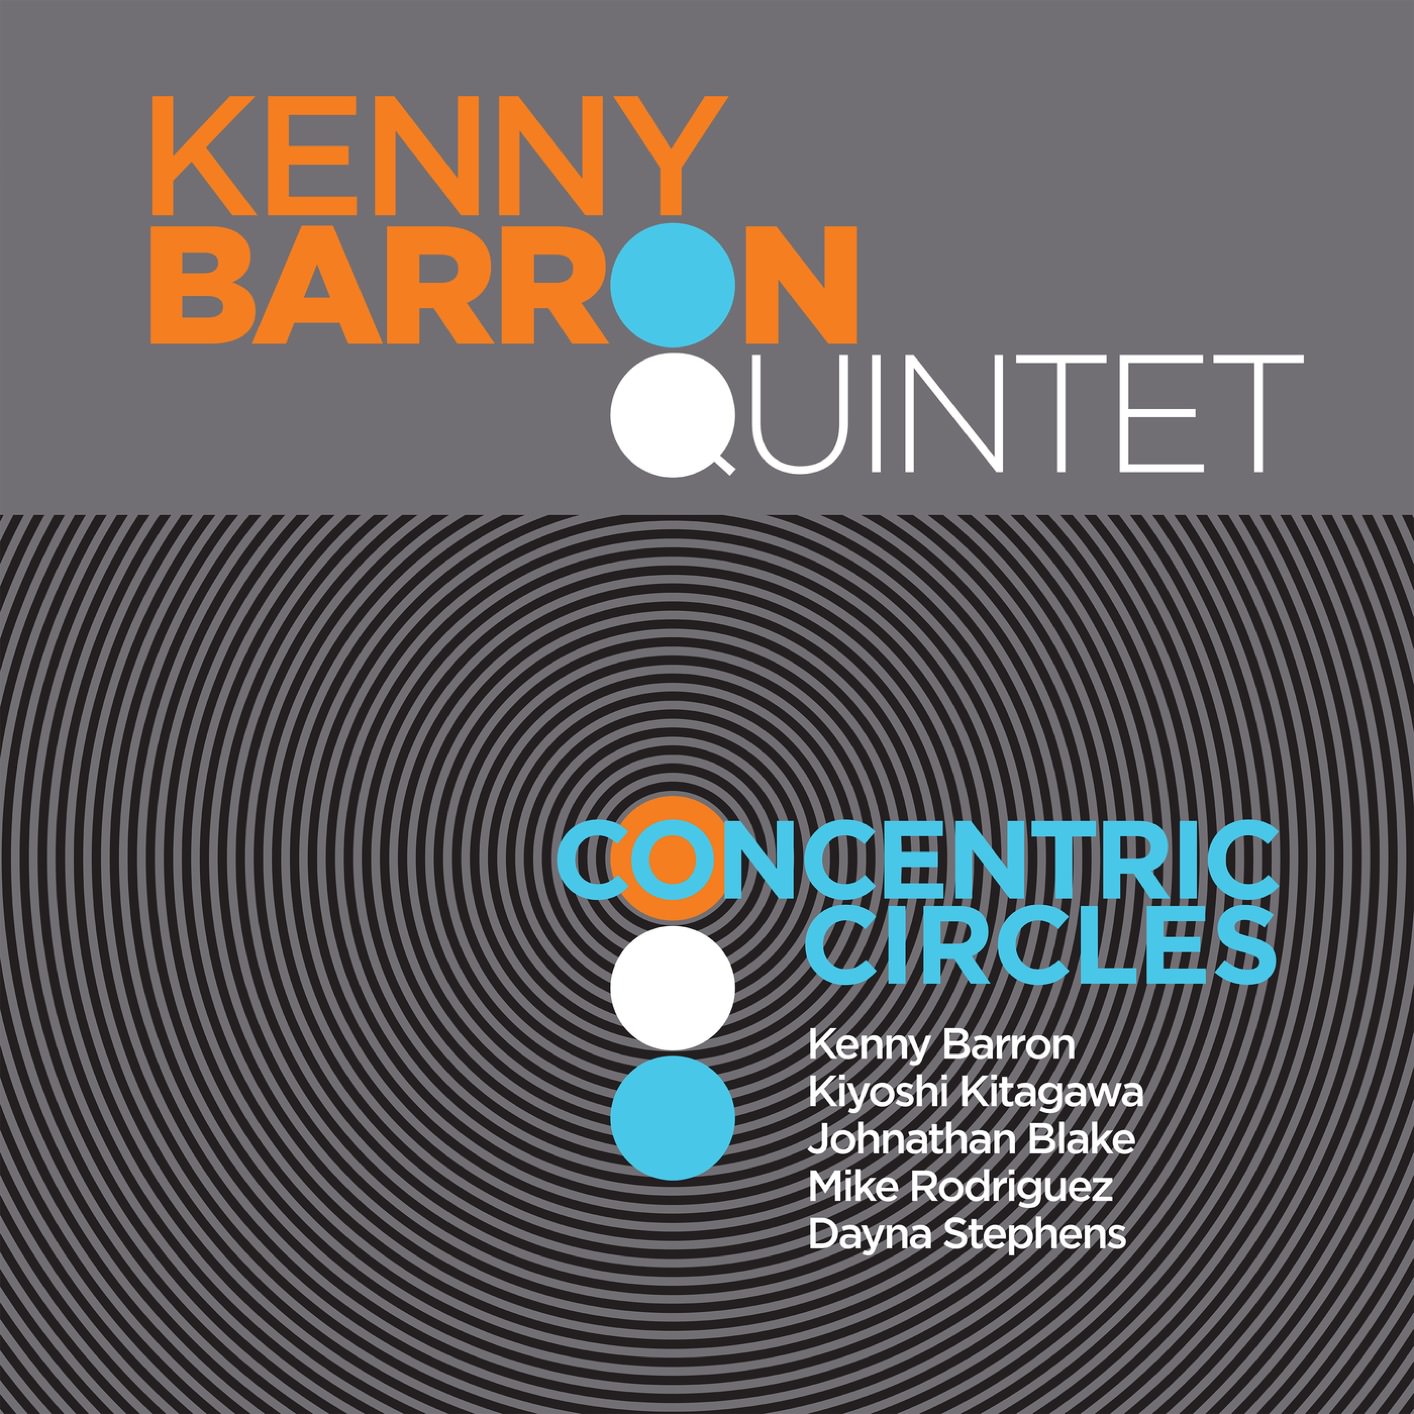 Kenny Barron Quintet - Concentric Circles (2018) [FLAC 24bit/96kHz]